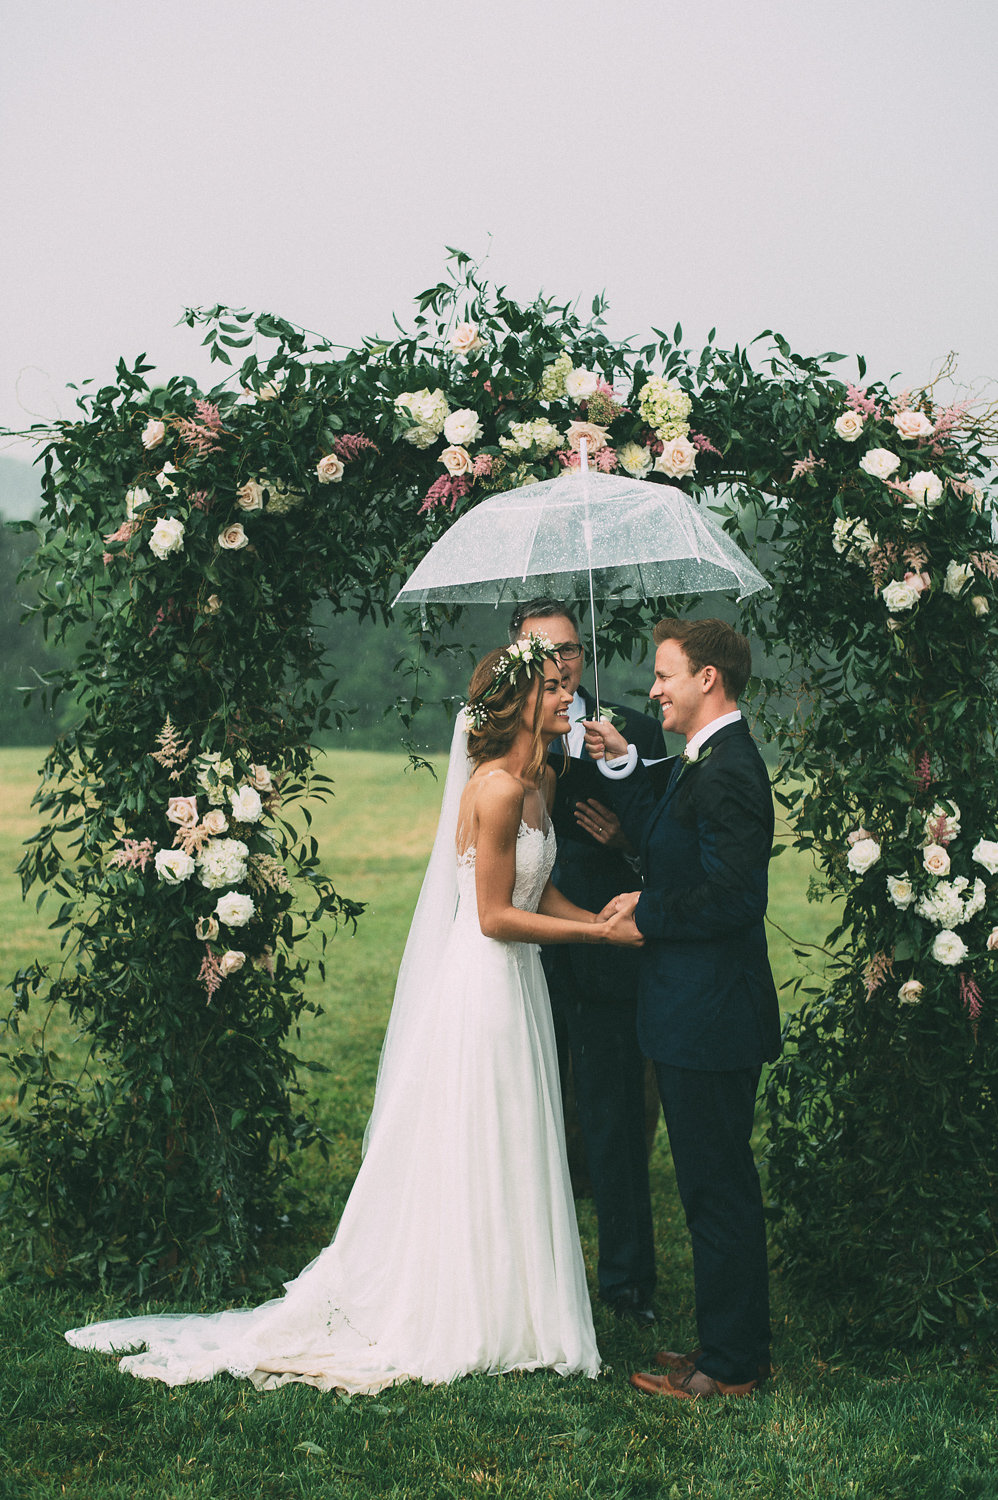 Rain On Your Wedding Day